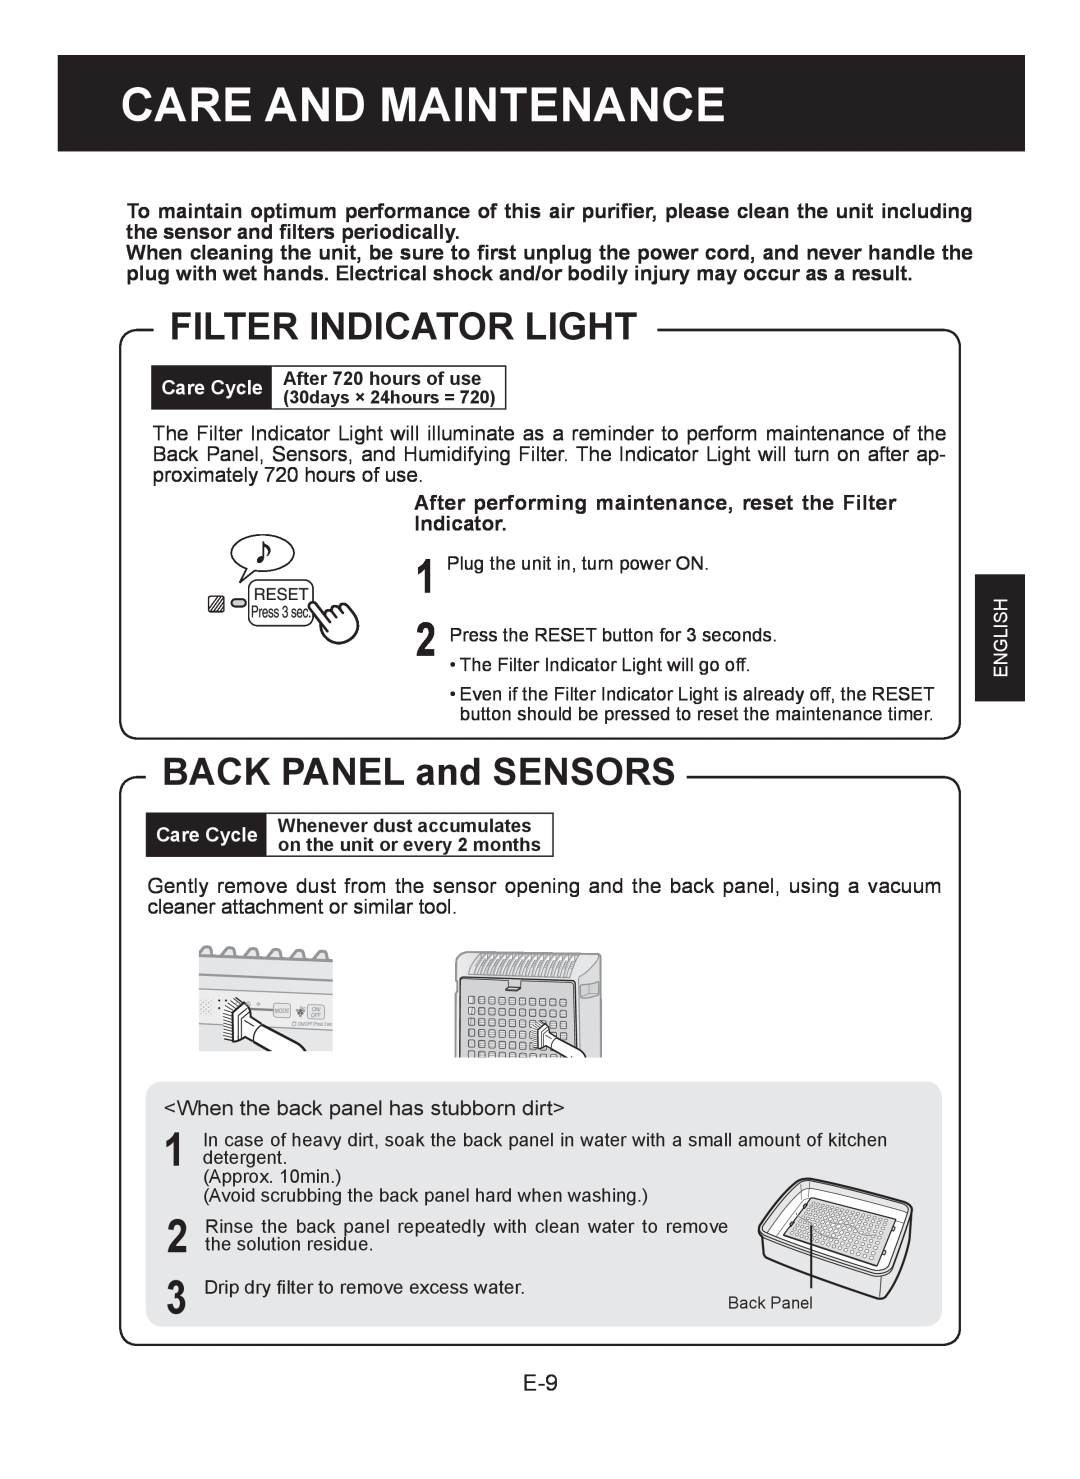 Sharp KC-930E operation manual Care And Maintenance, Filter Indicator Light, BACK PANEL and SENSORS 